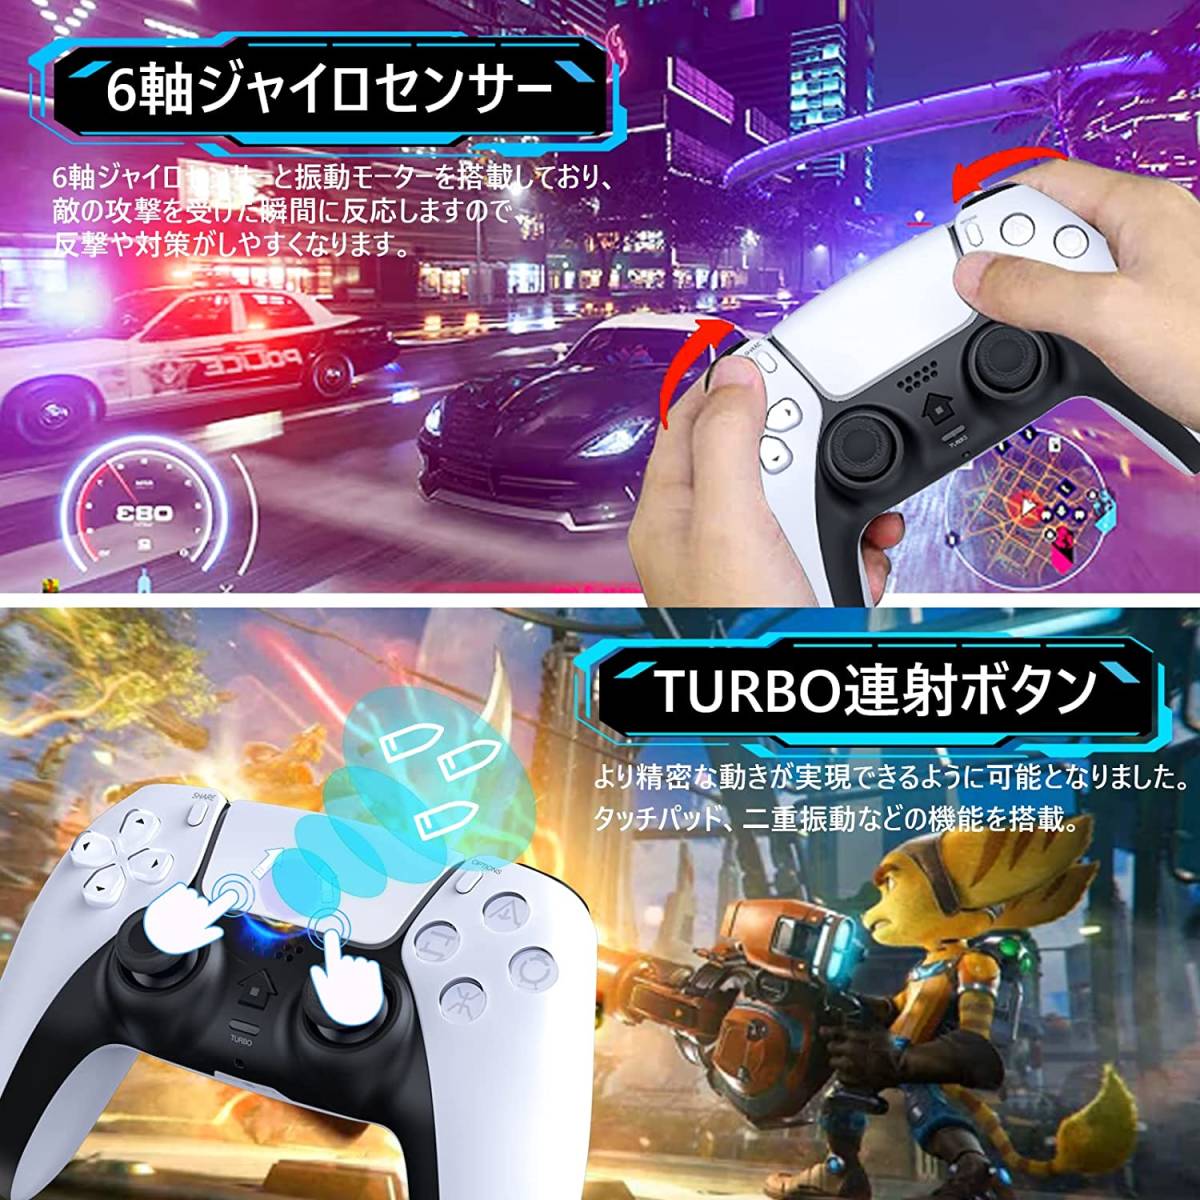 PS4コントローラー 重力感応 Turbo連射 機能6核振動機能 _画像6